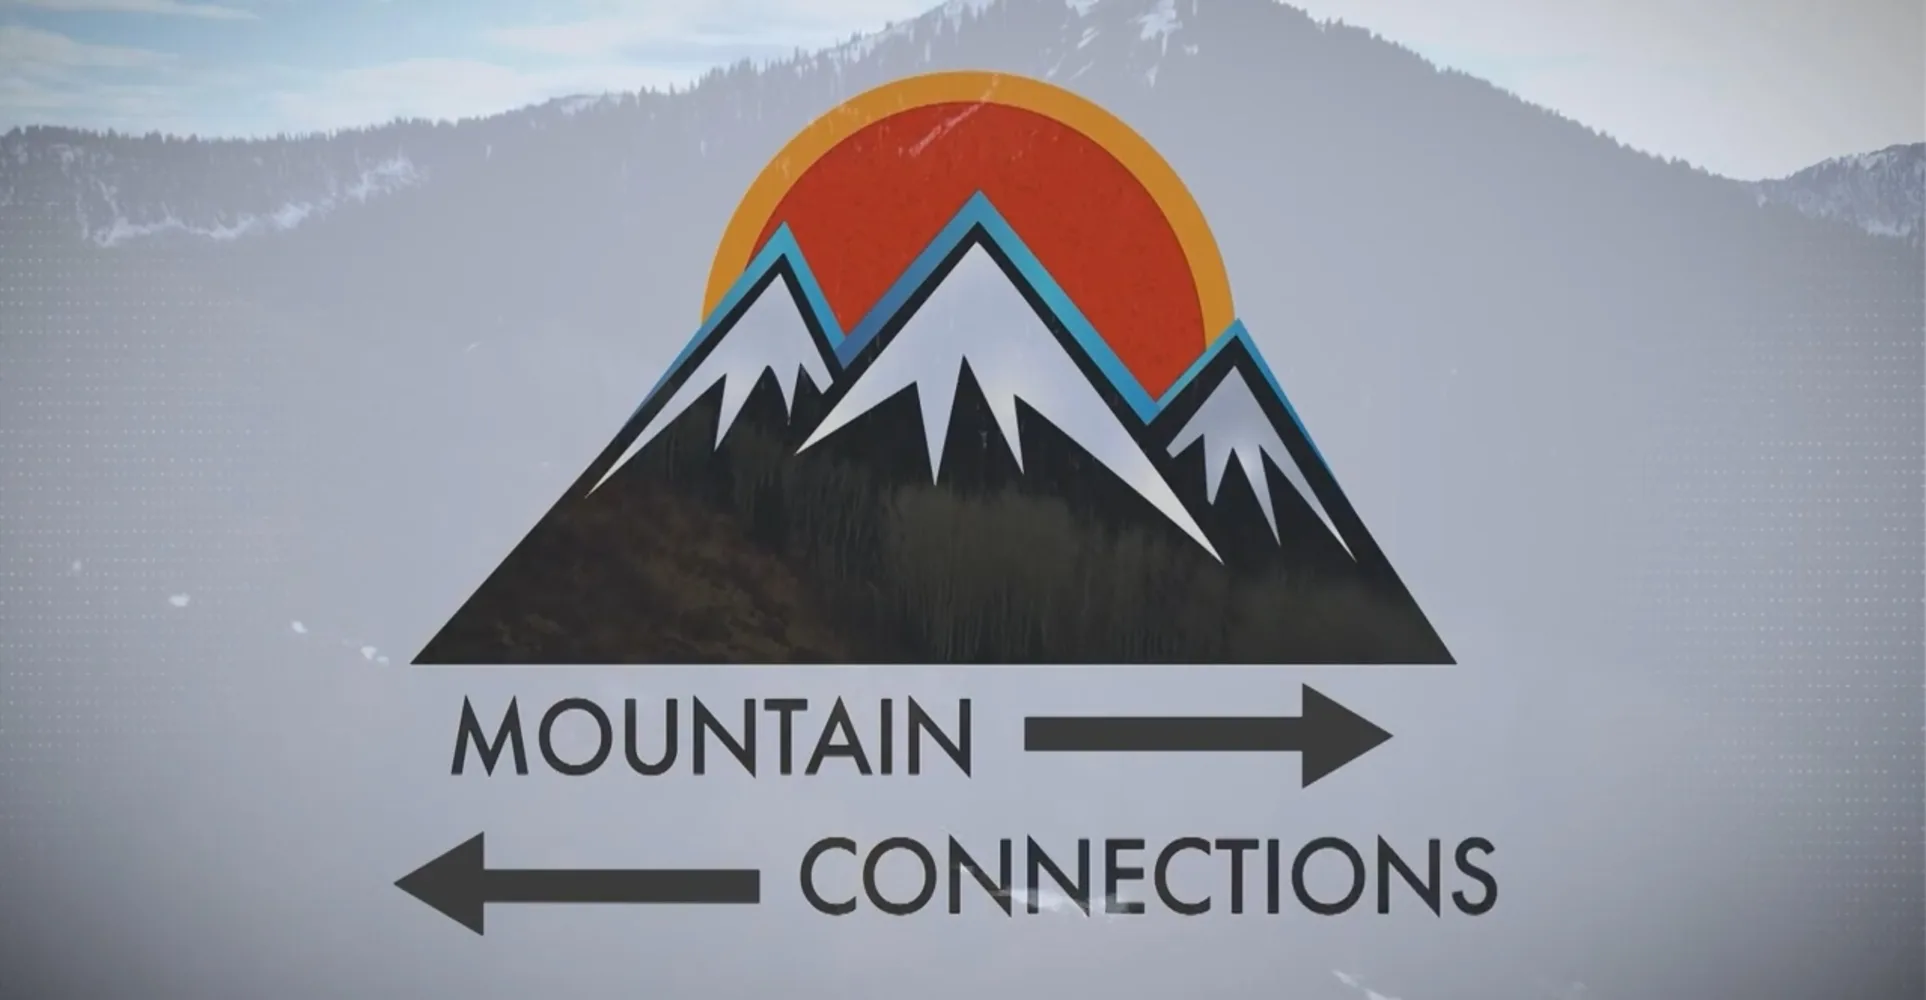 Mountain Connections logo on YouTube screenshot.